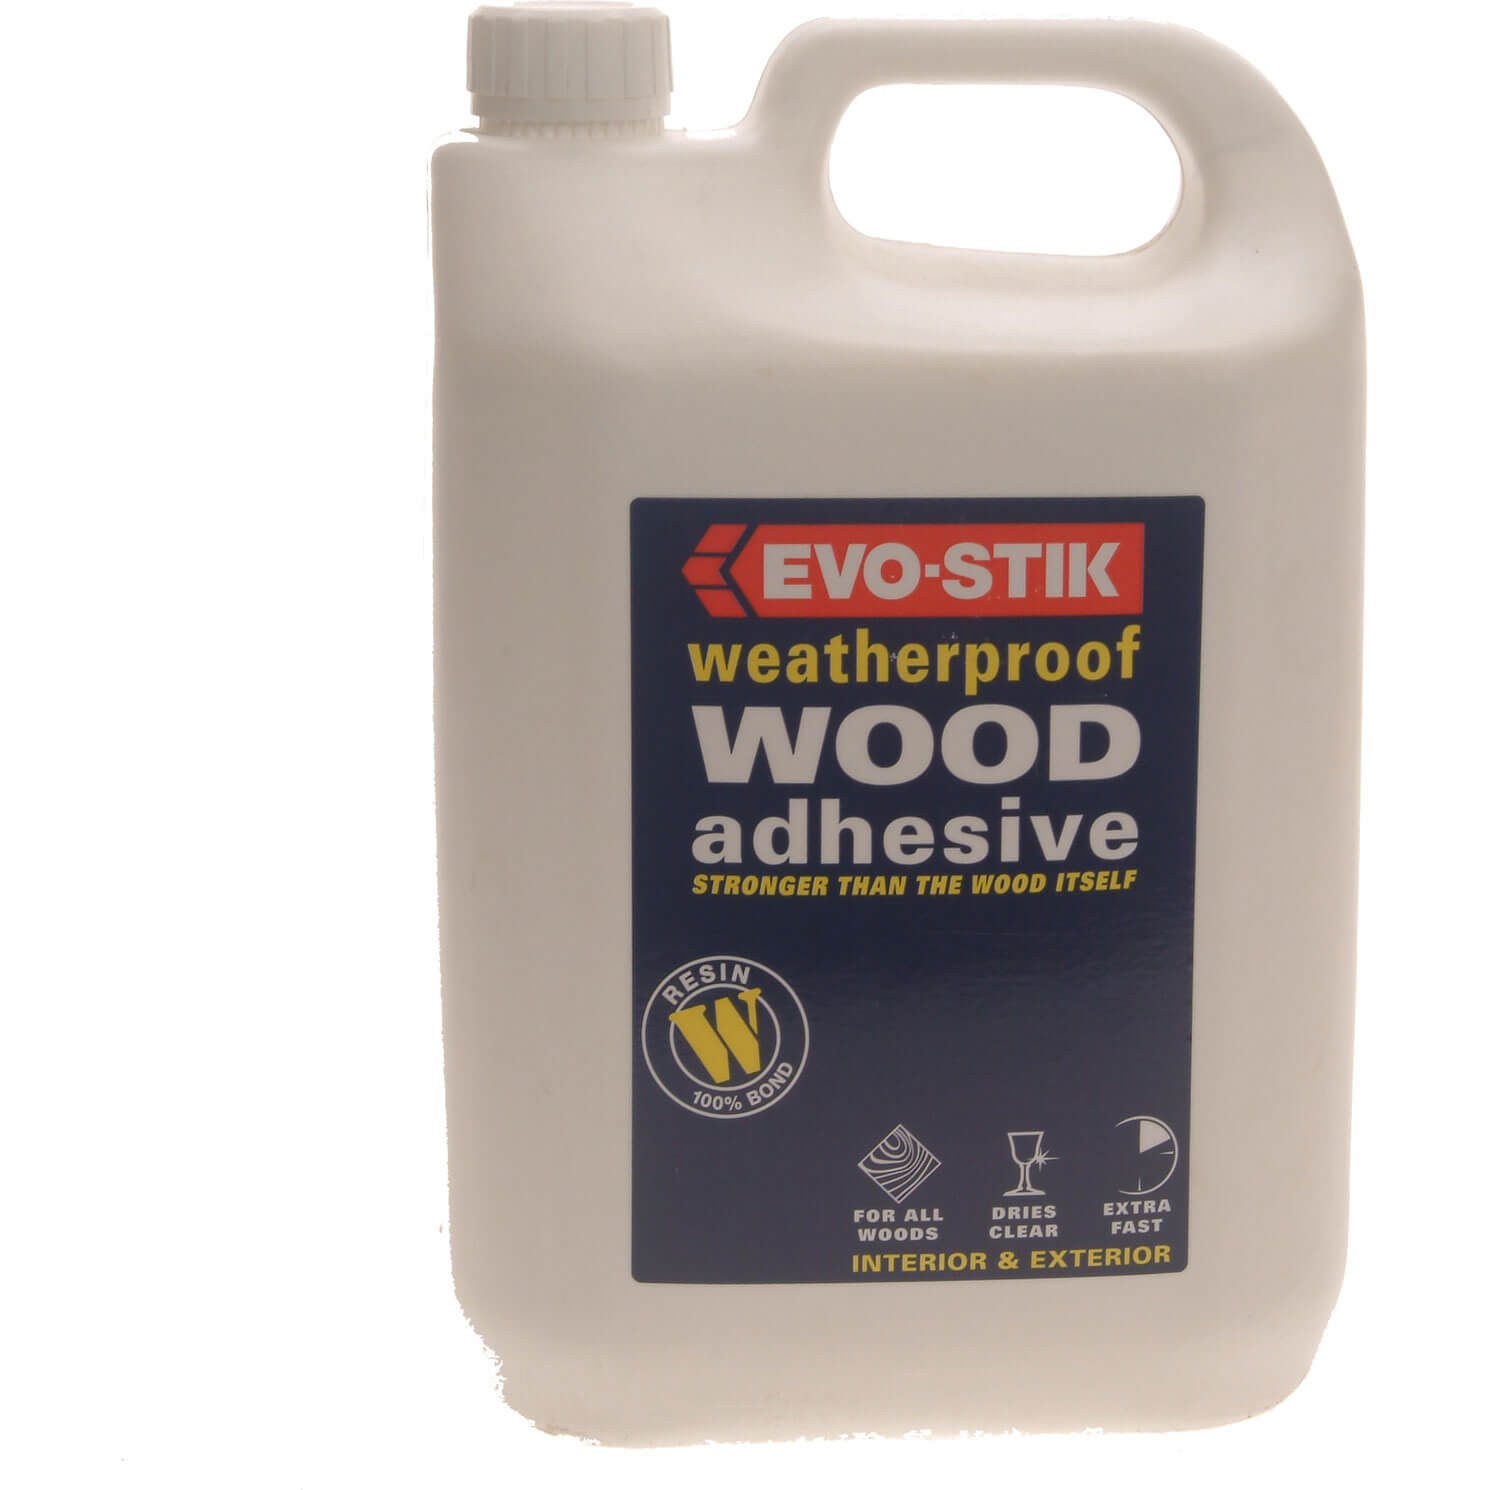 Photo of Evo-stik Weatherproof Wood Adhesive 5l